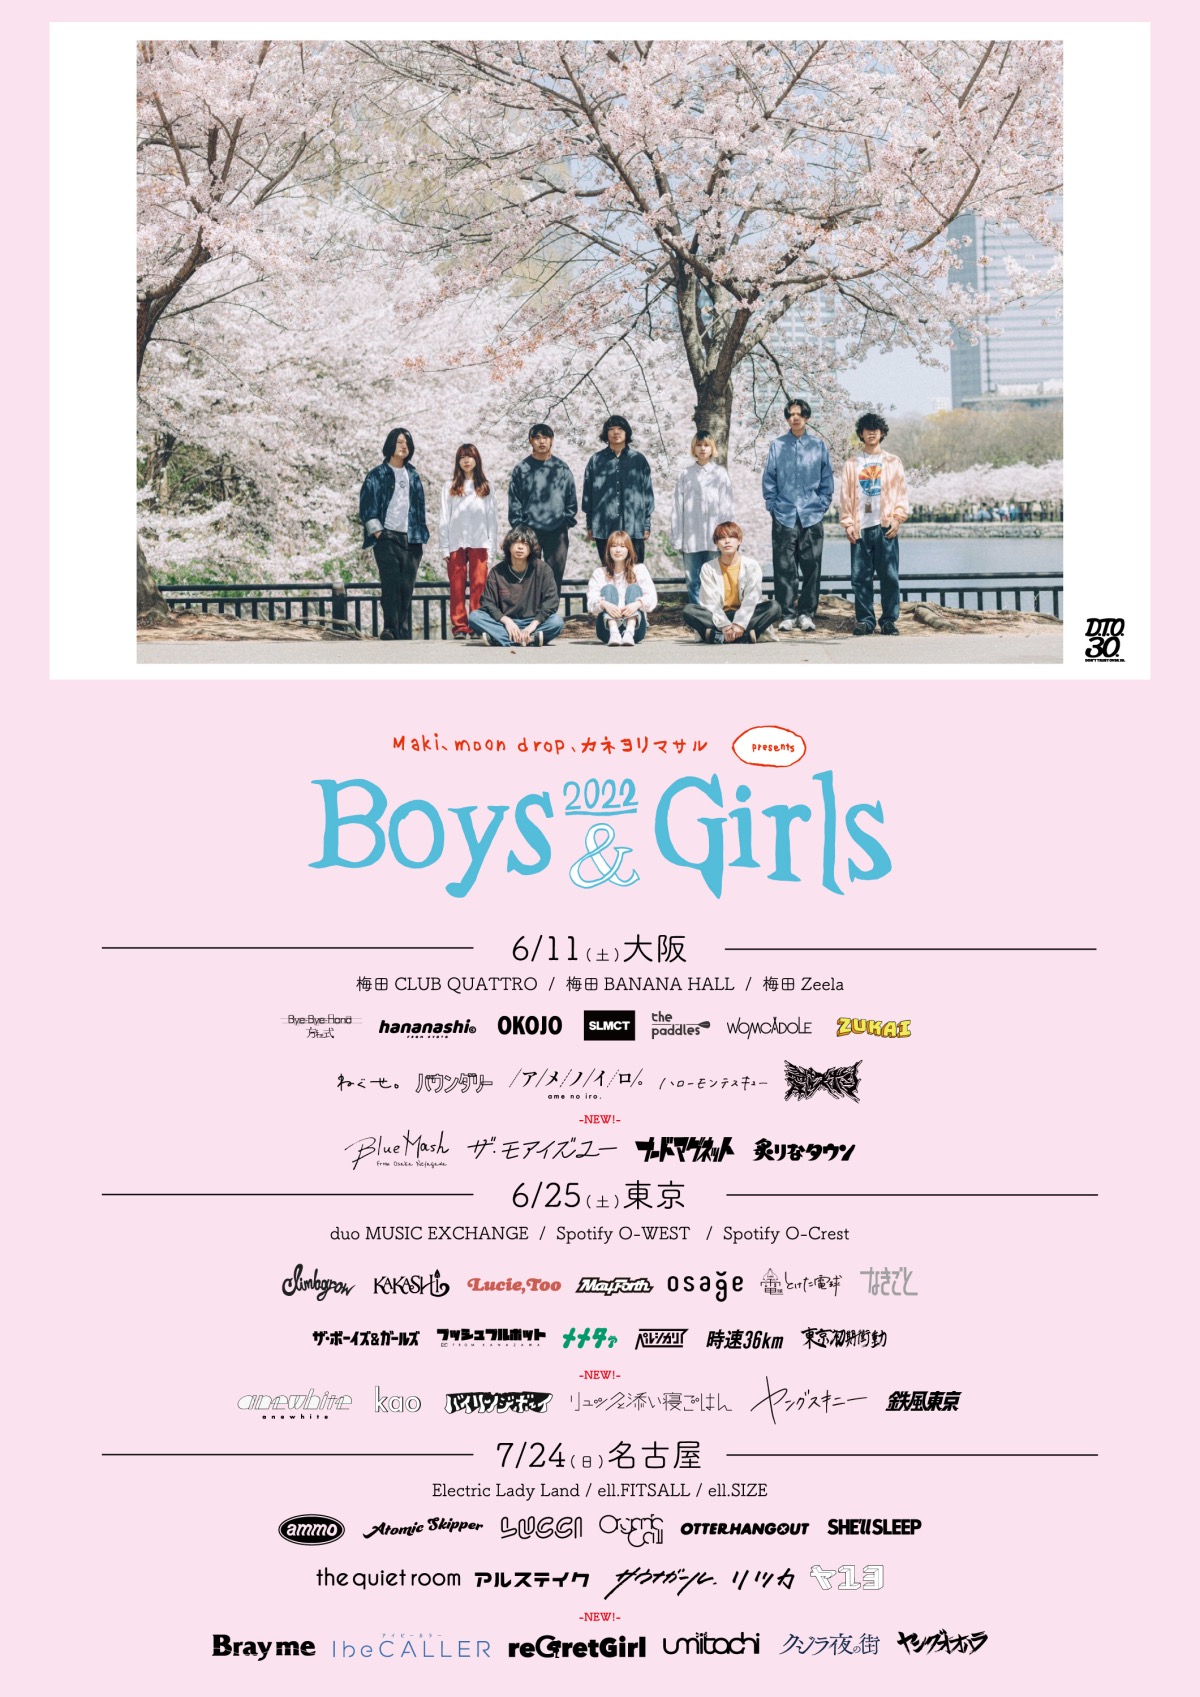 Maki & moon drop & カネヨリマサル presents  【Boys & Girls】